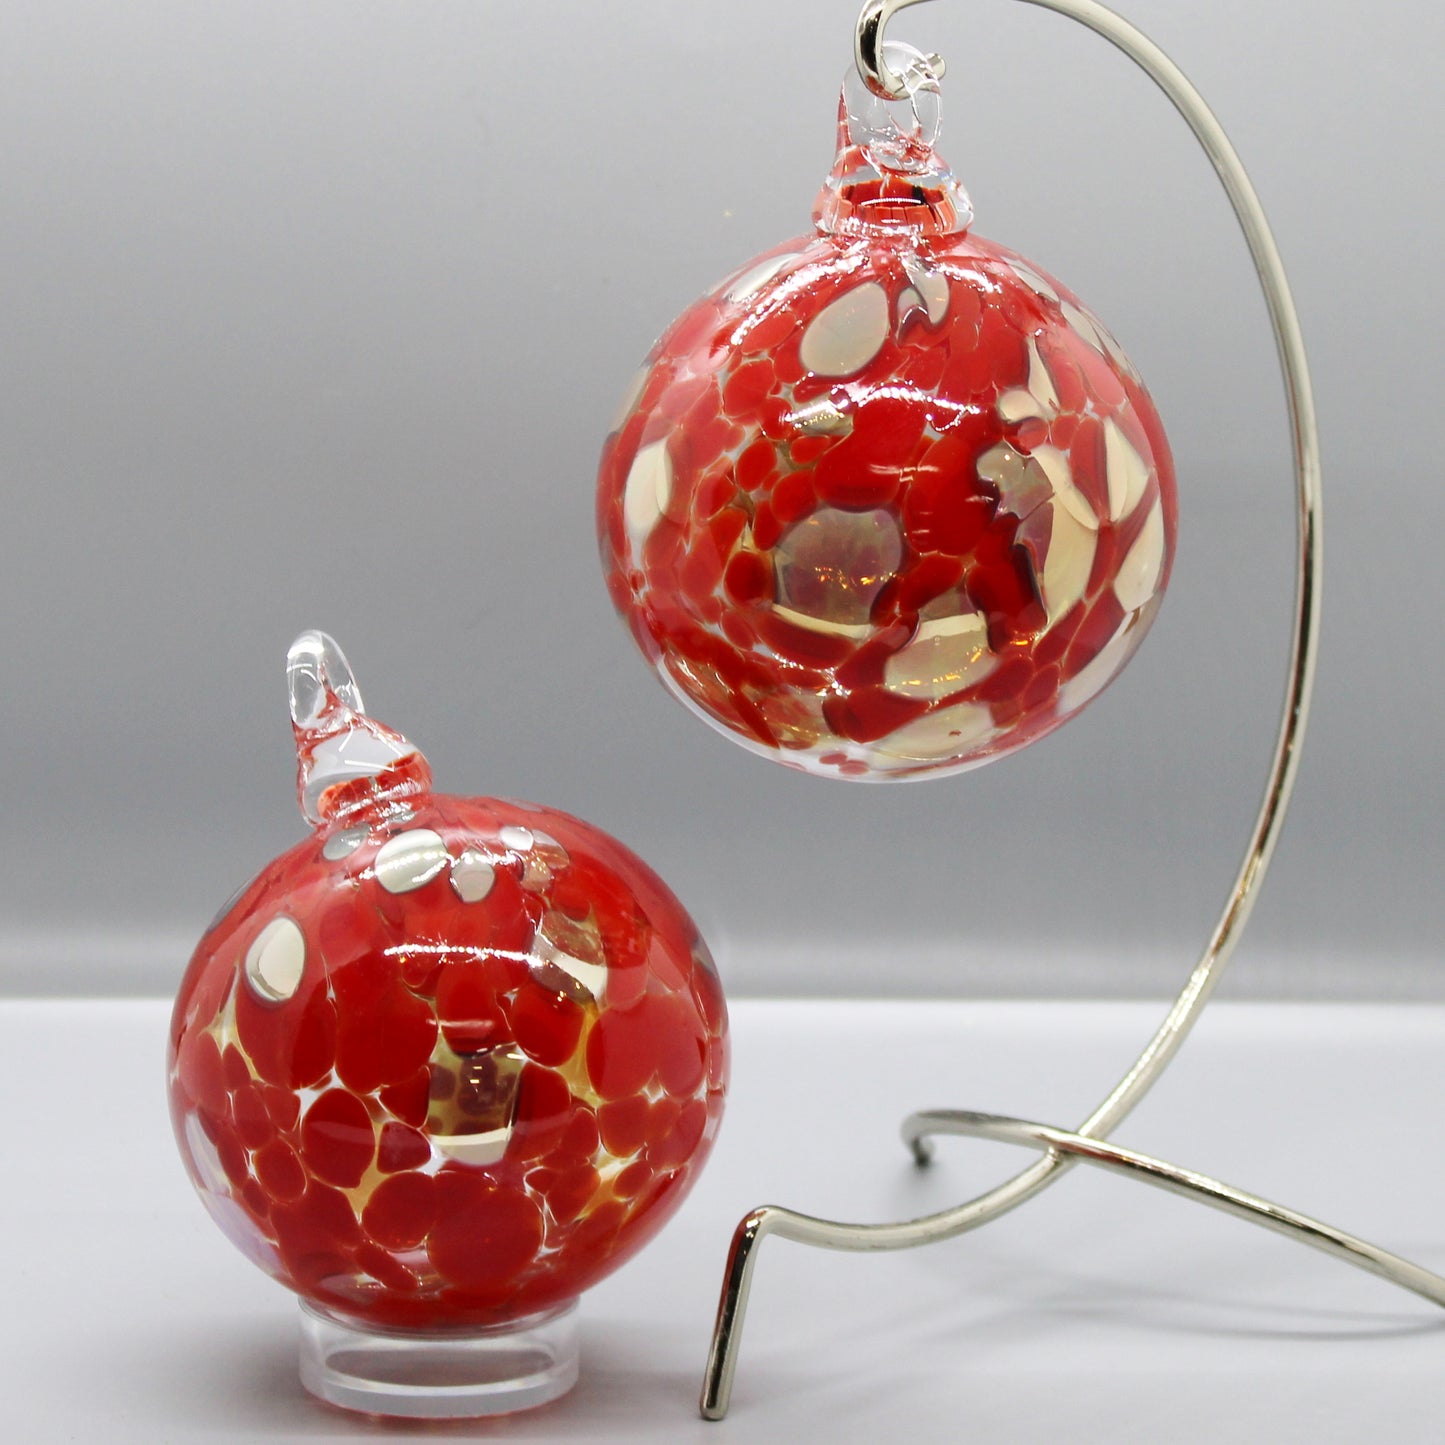 Dapple Ornaments